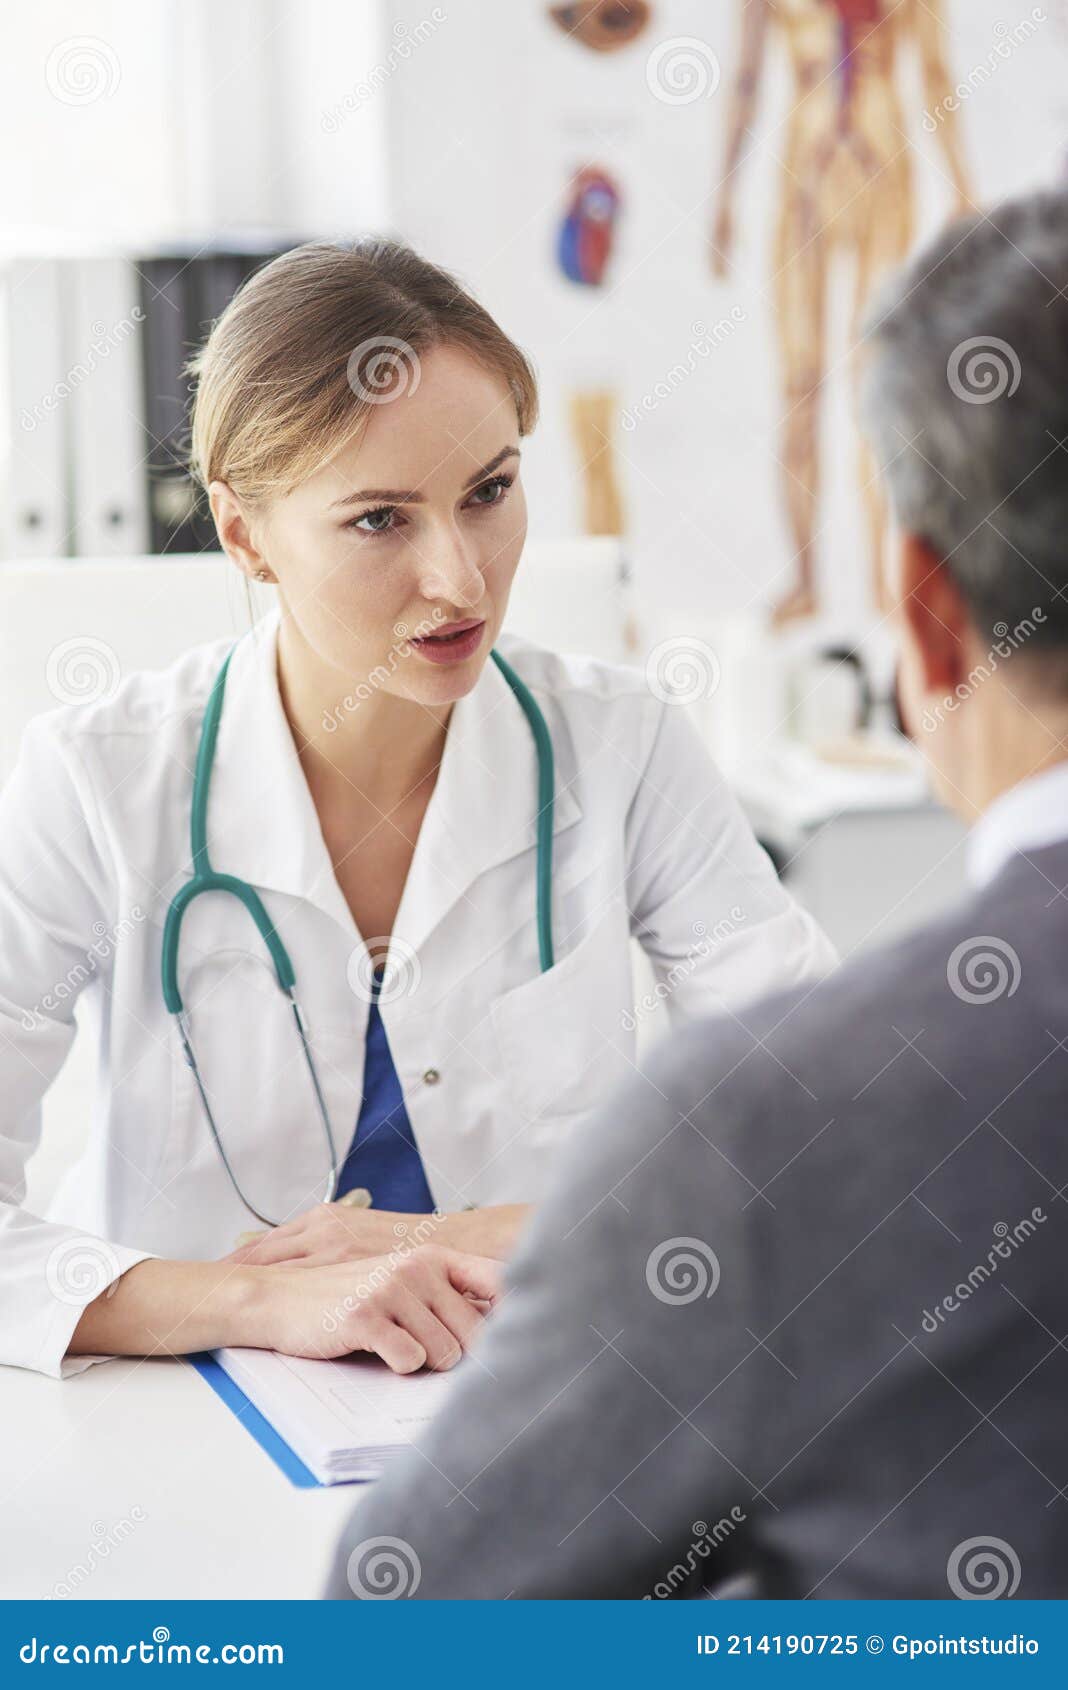 female doctor talking to her patient in doctorÃ¢â¬â¢s office